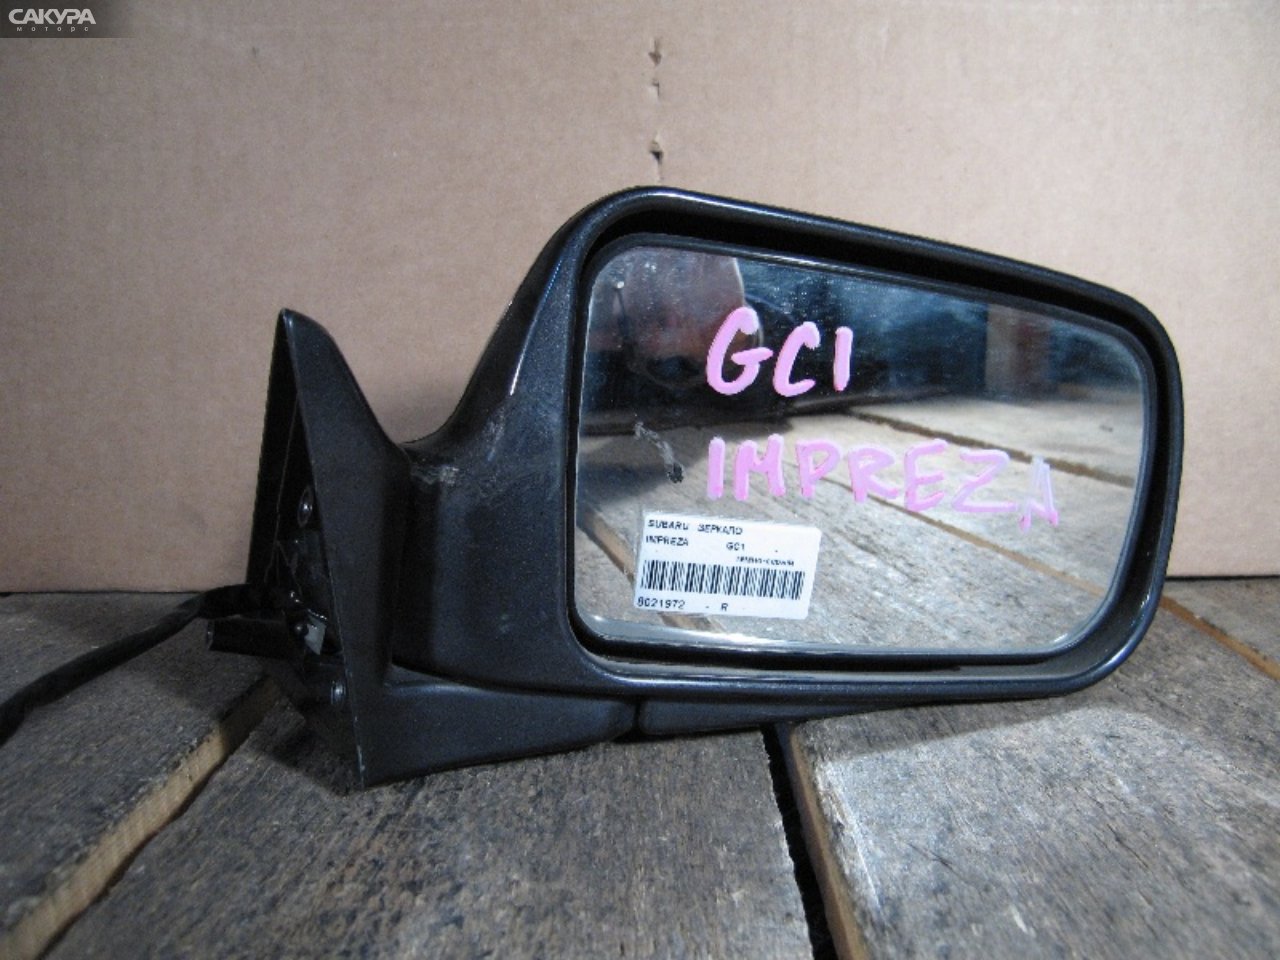 Зеркало боковое правое Subaru Impreza GC1: купить в Сакура Абакан.